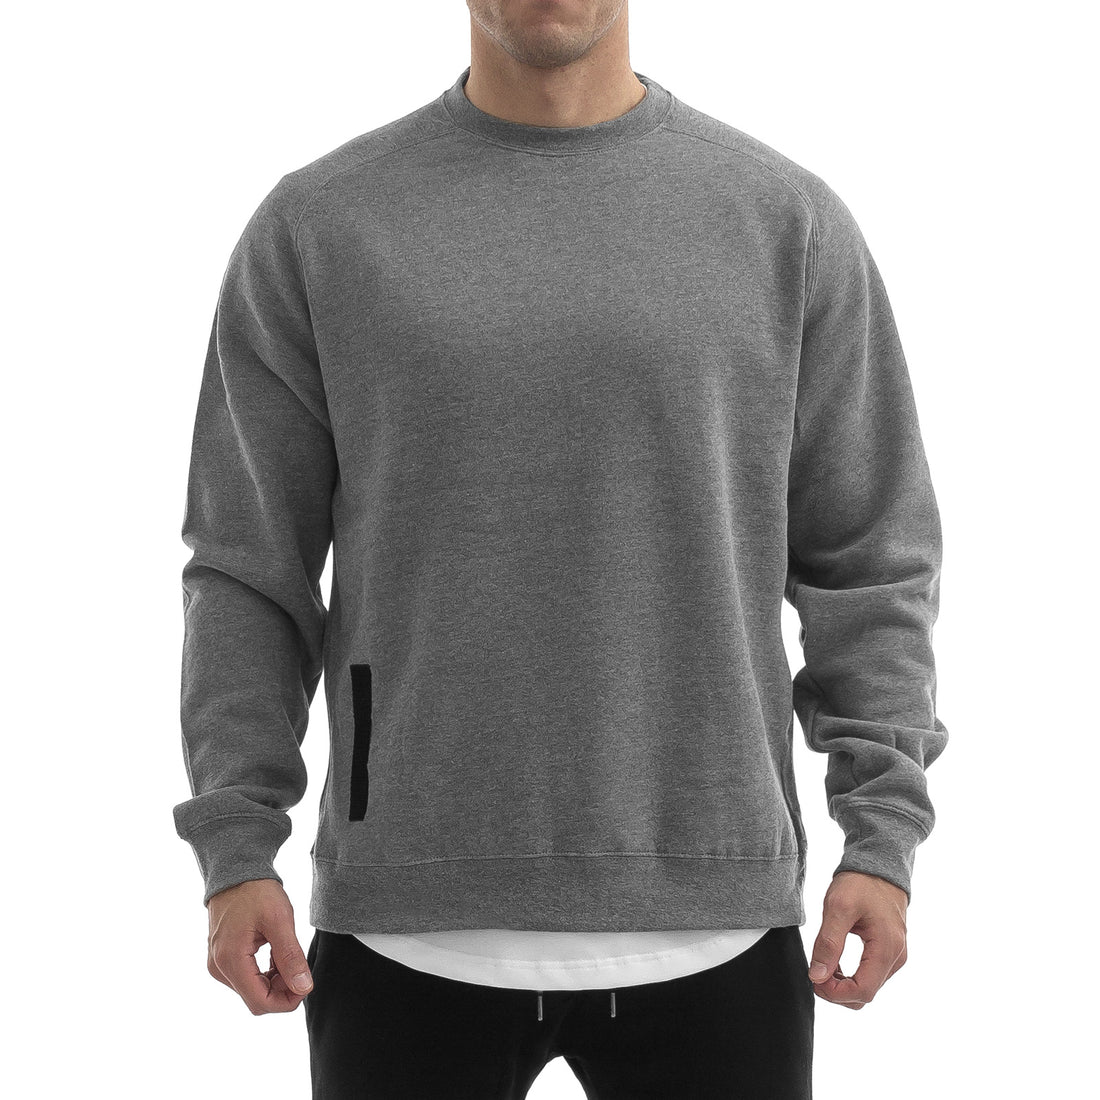 Oversize Sweatshirt - dark grey heather